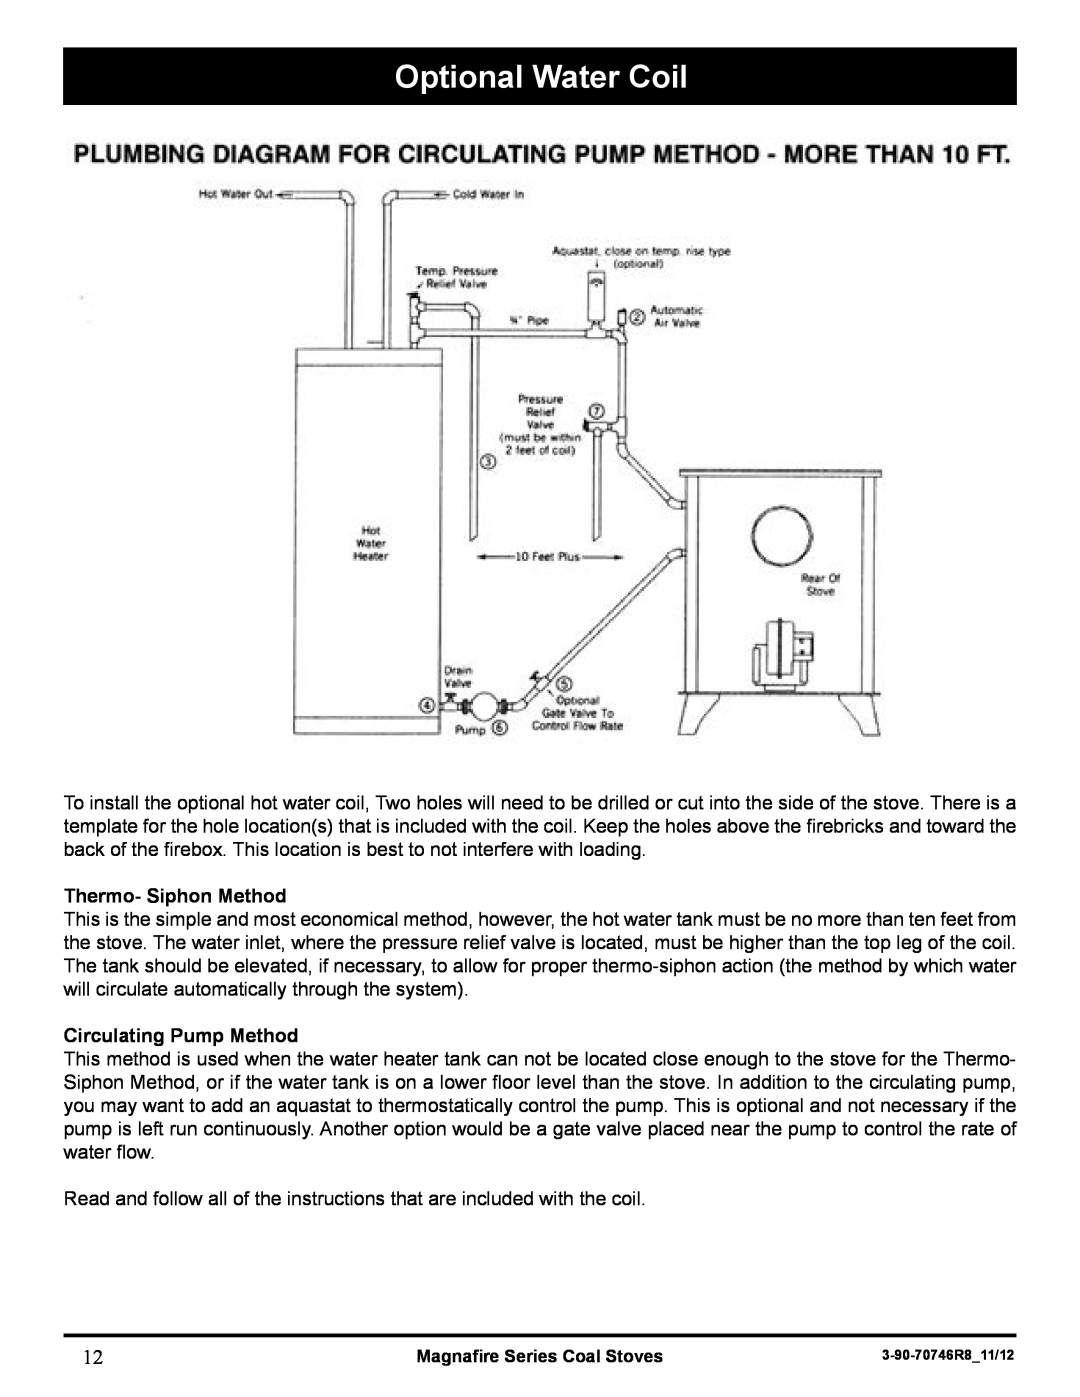 Harman Stove Company MARK III manual Optional Water Coil, Thermo- Siphon Method, Circulating Pump Method 